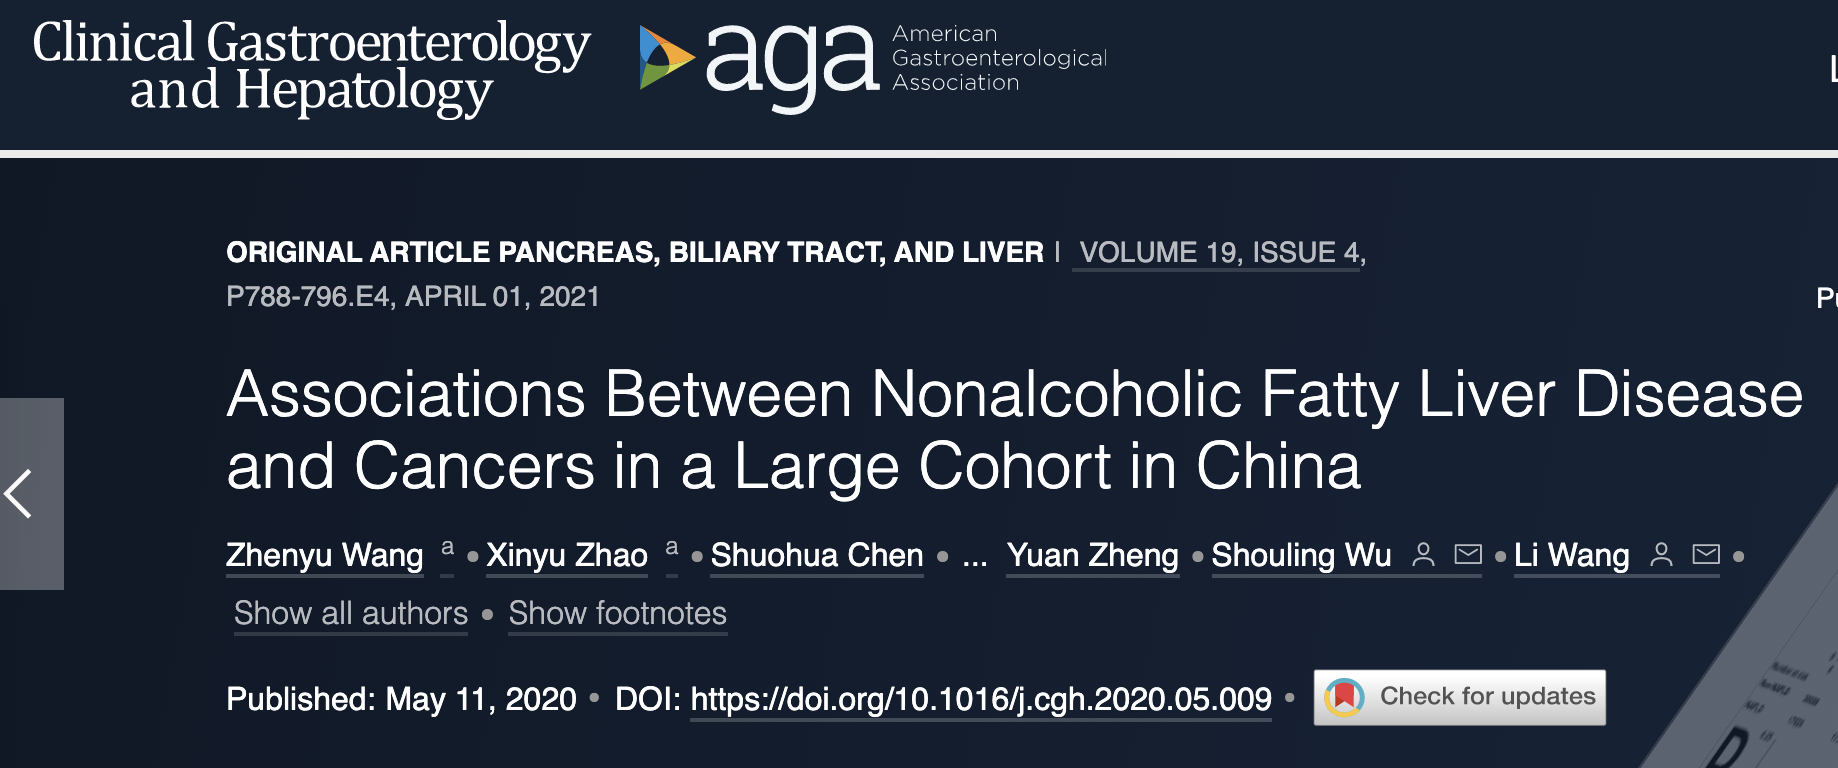 Clin Gastroenterology H: 中国大队列人群中非酒精性脂肪肝与癌症发生的关系